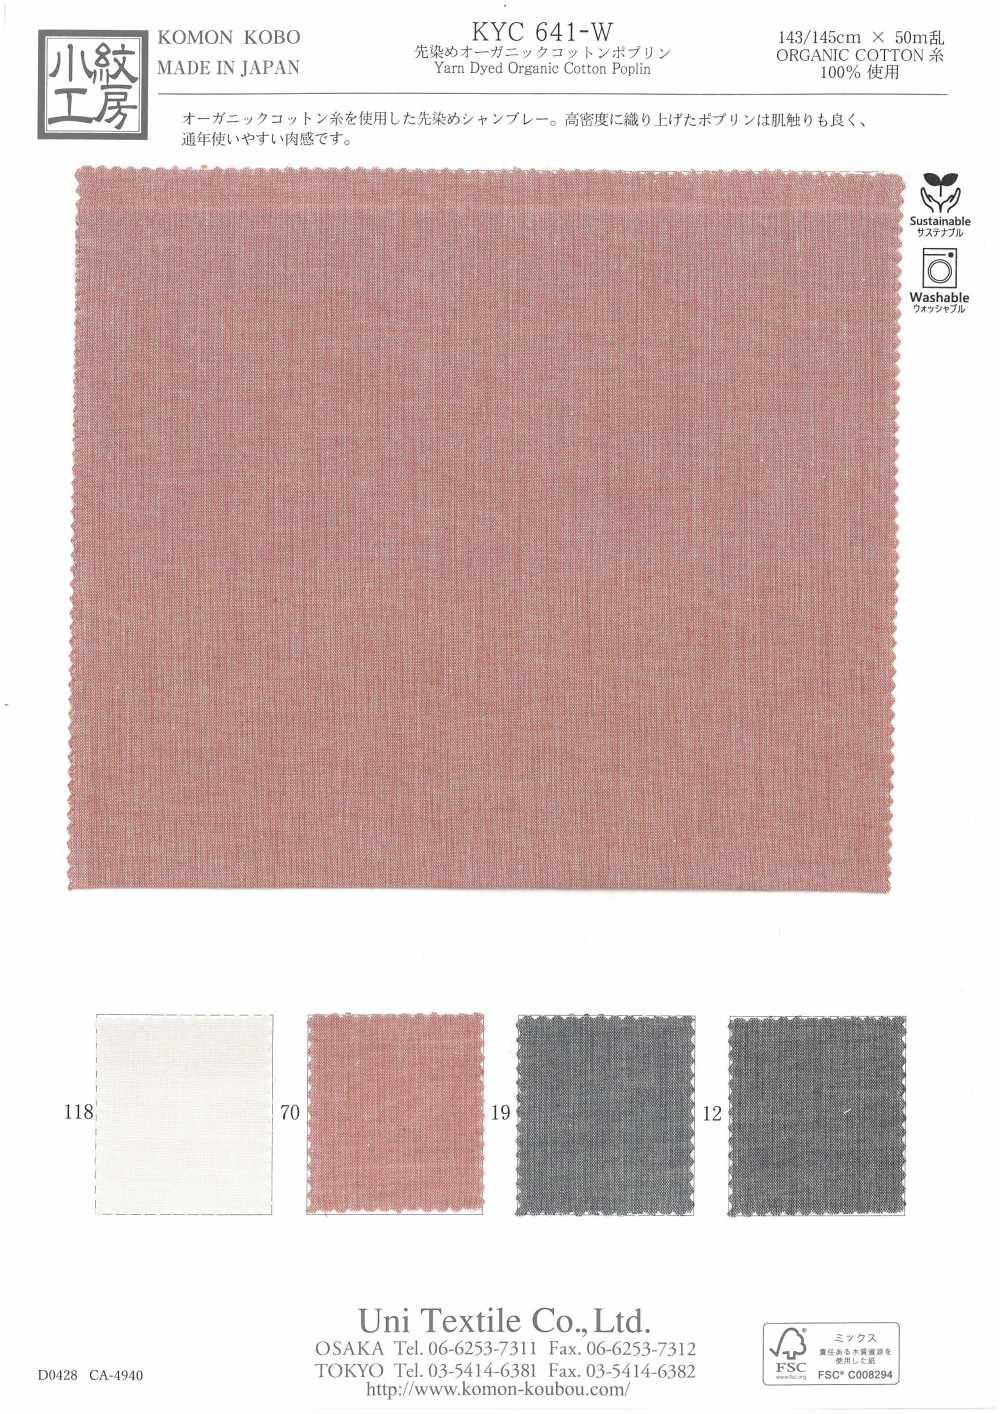 KYC641-W Yarn-dyed Organic Cotton Poplin[Textile / Fabric] Uni Textile